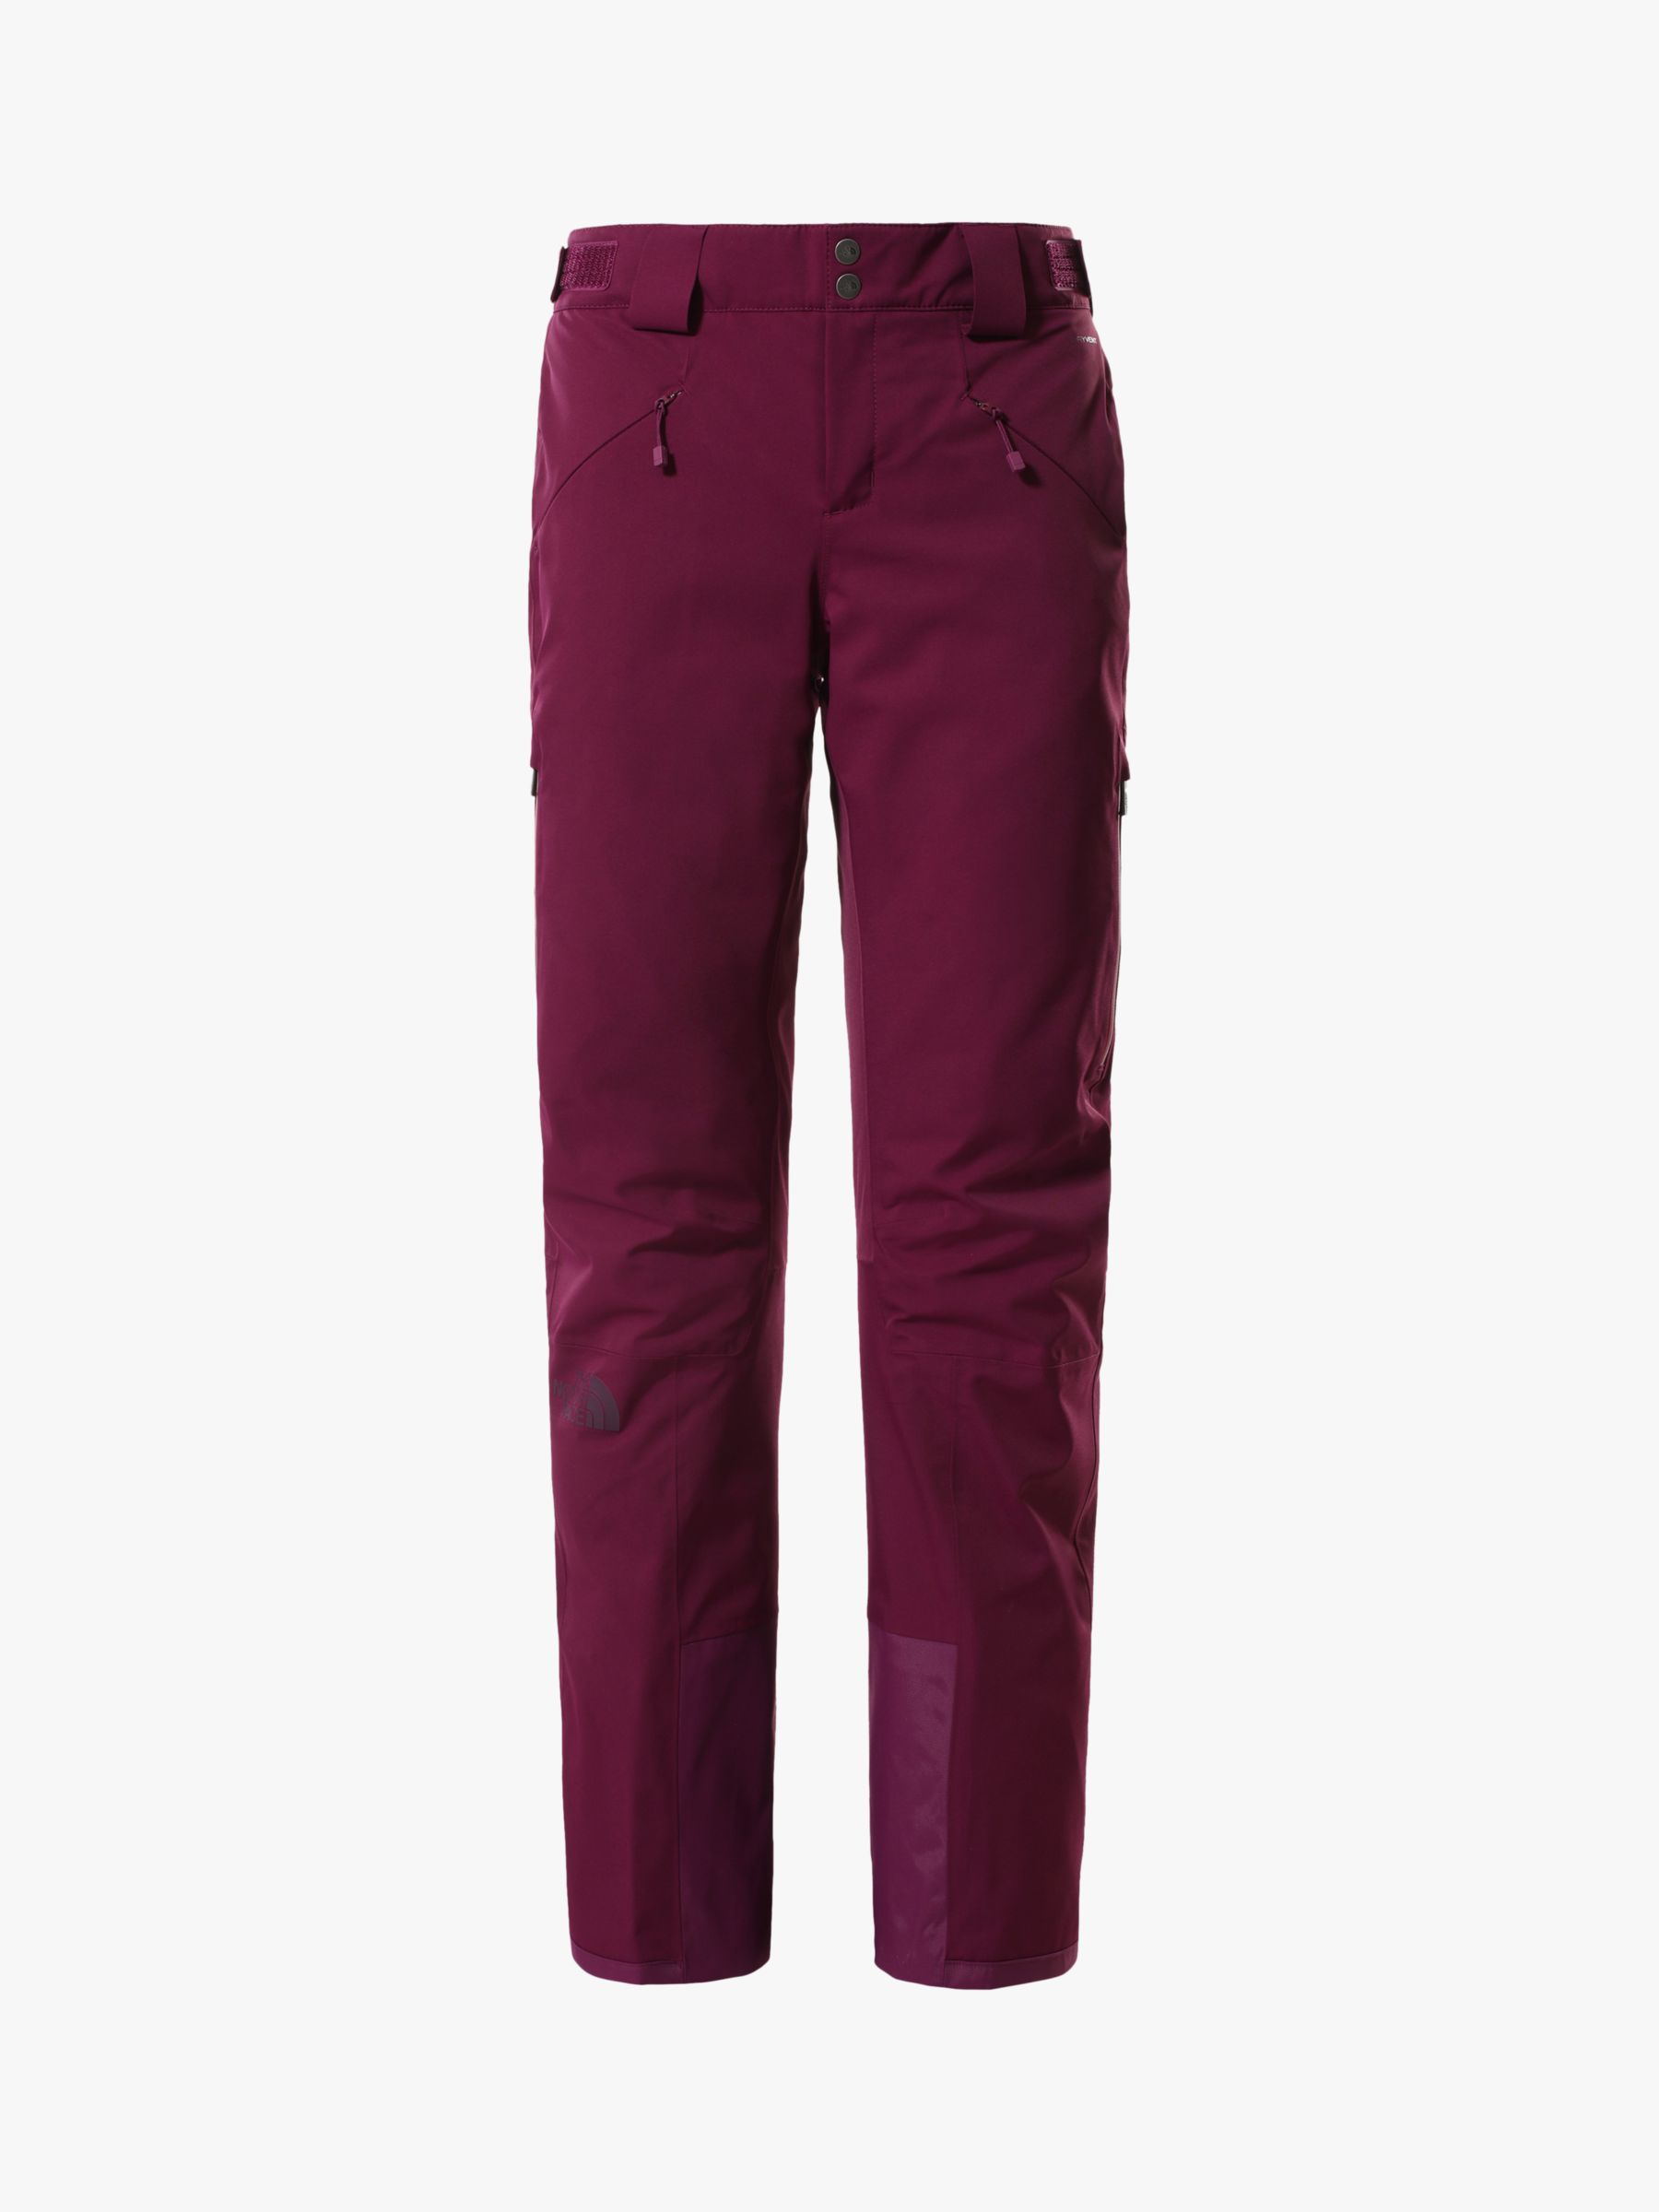 The North Face - Women's Lenado Pant - Ski trousers - Fiery Red | XS - Long